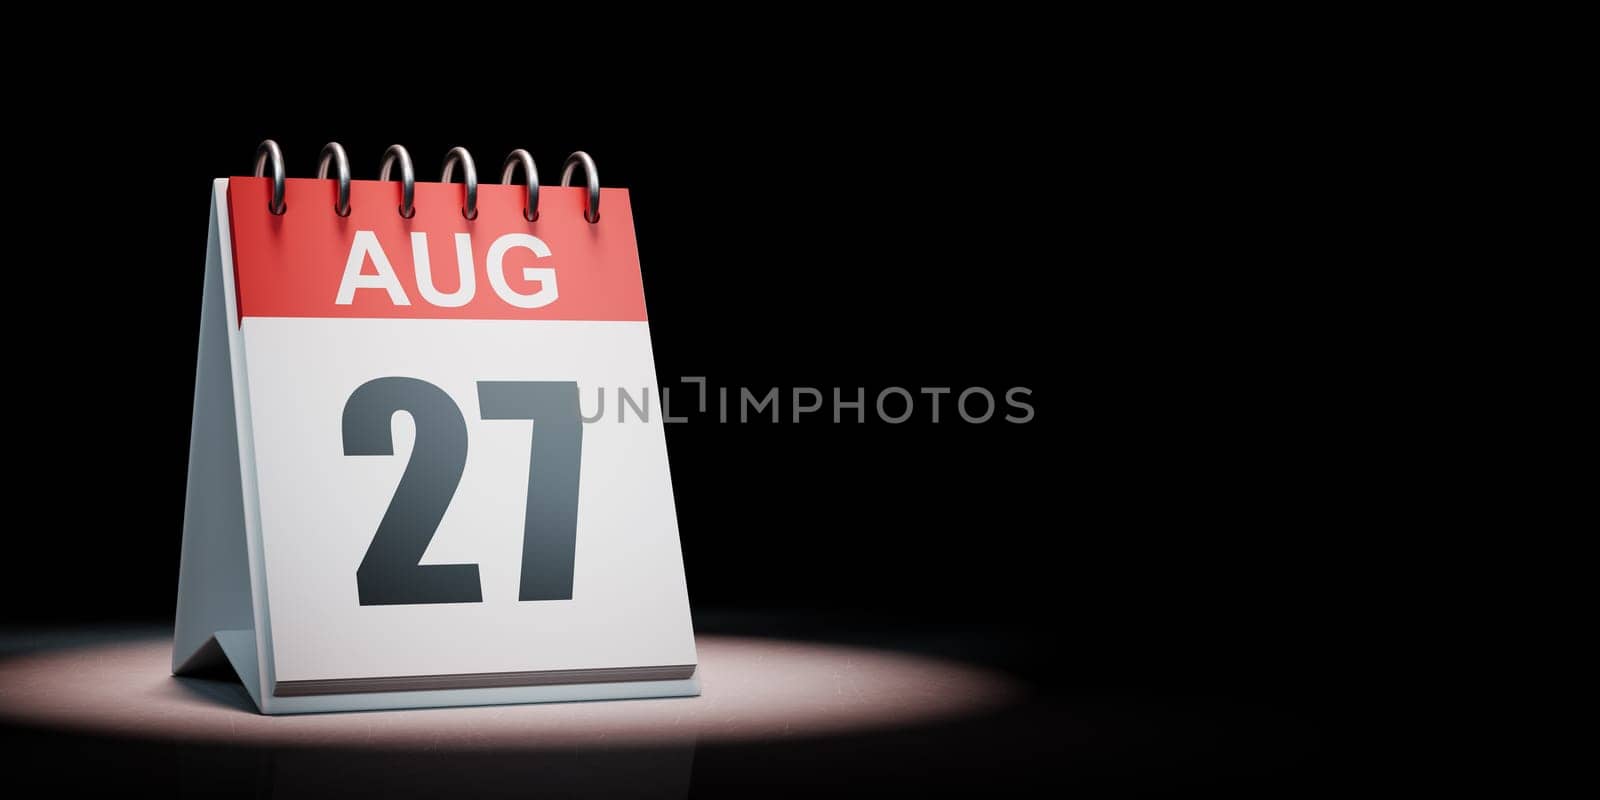 August 27 Calendar Spotlighted on Black Background by make